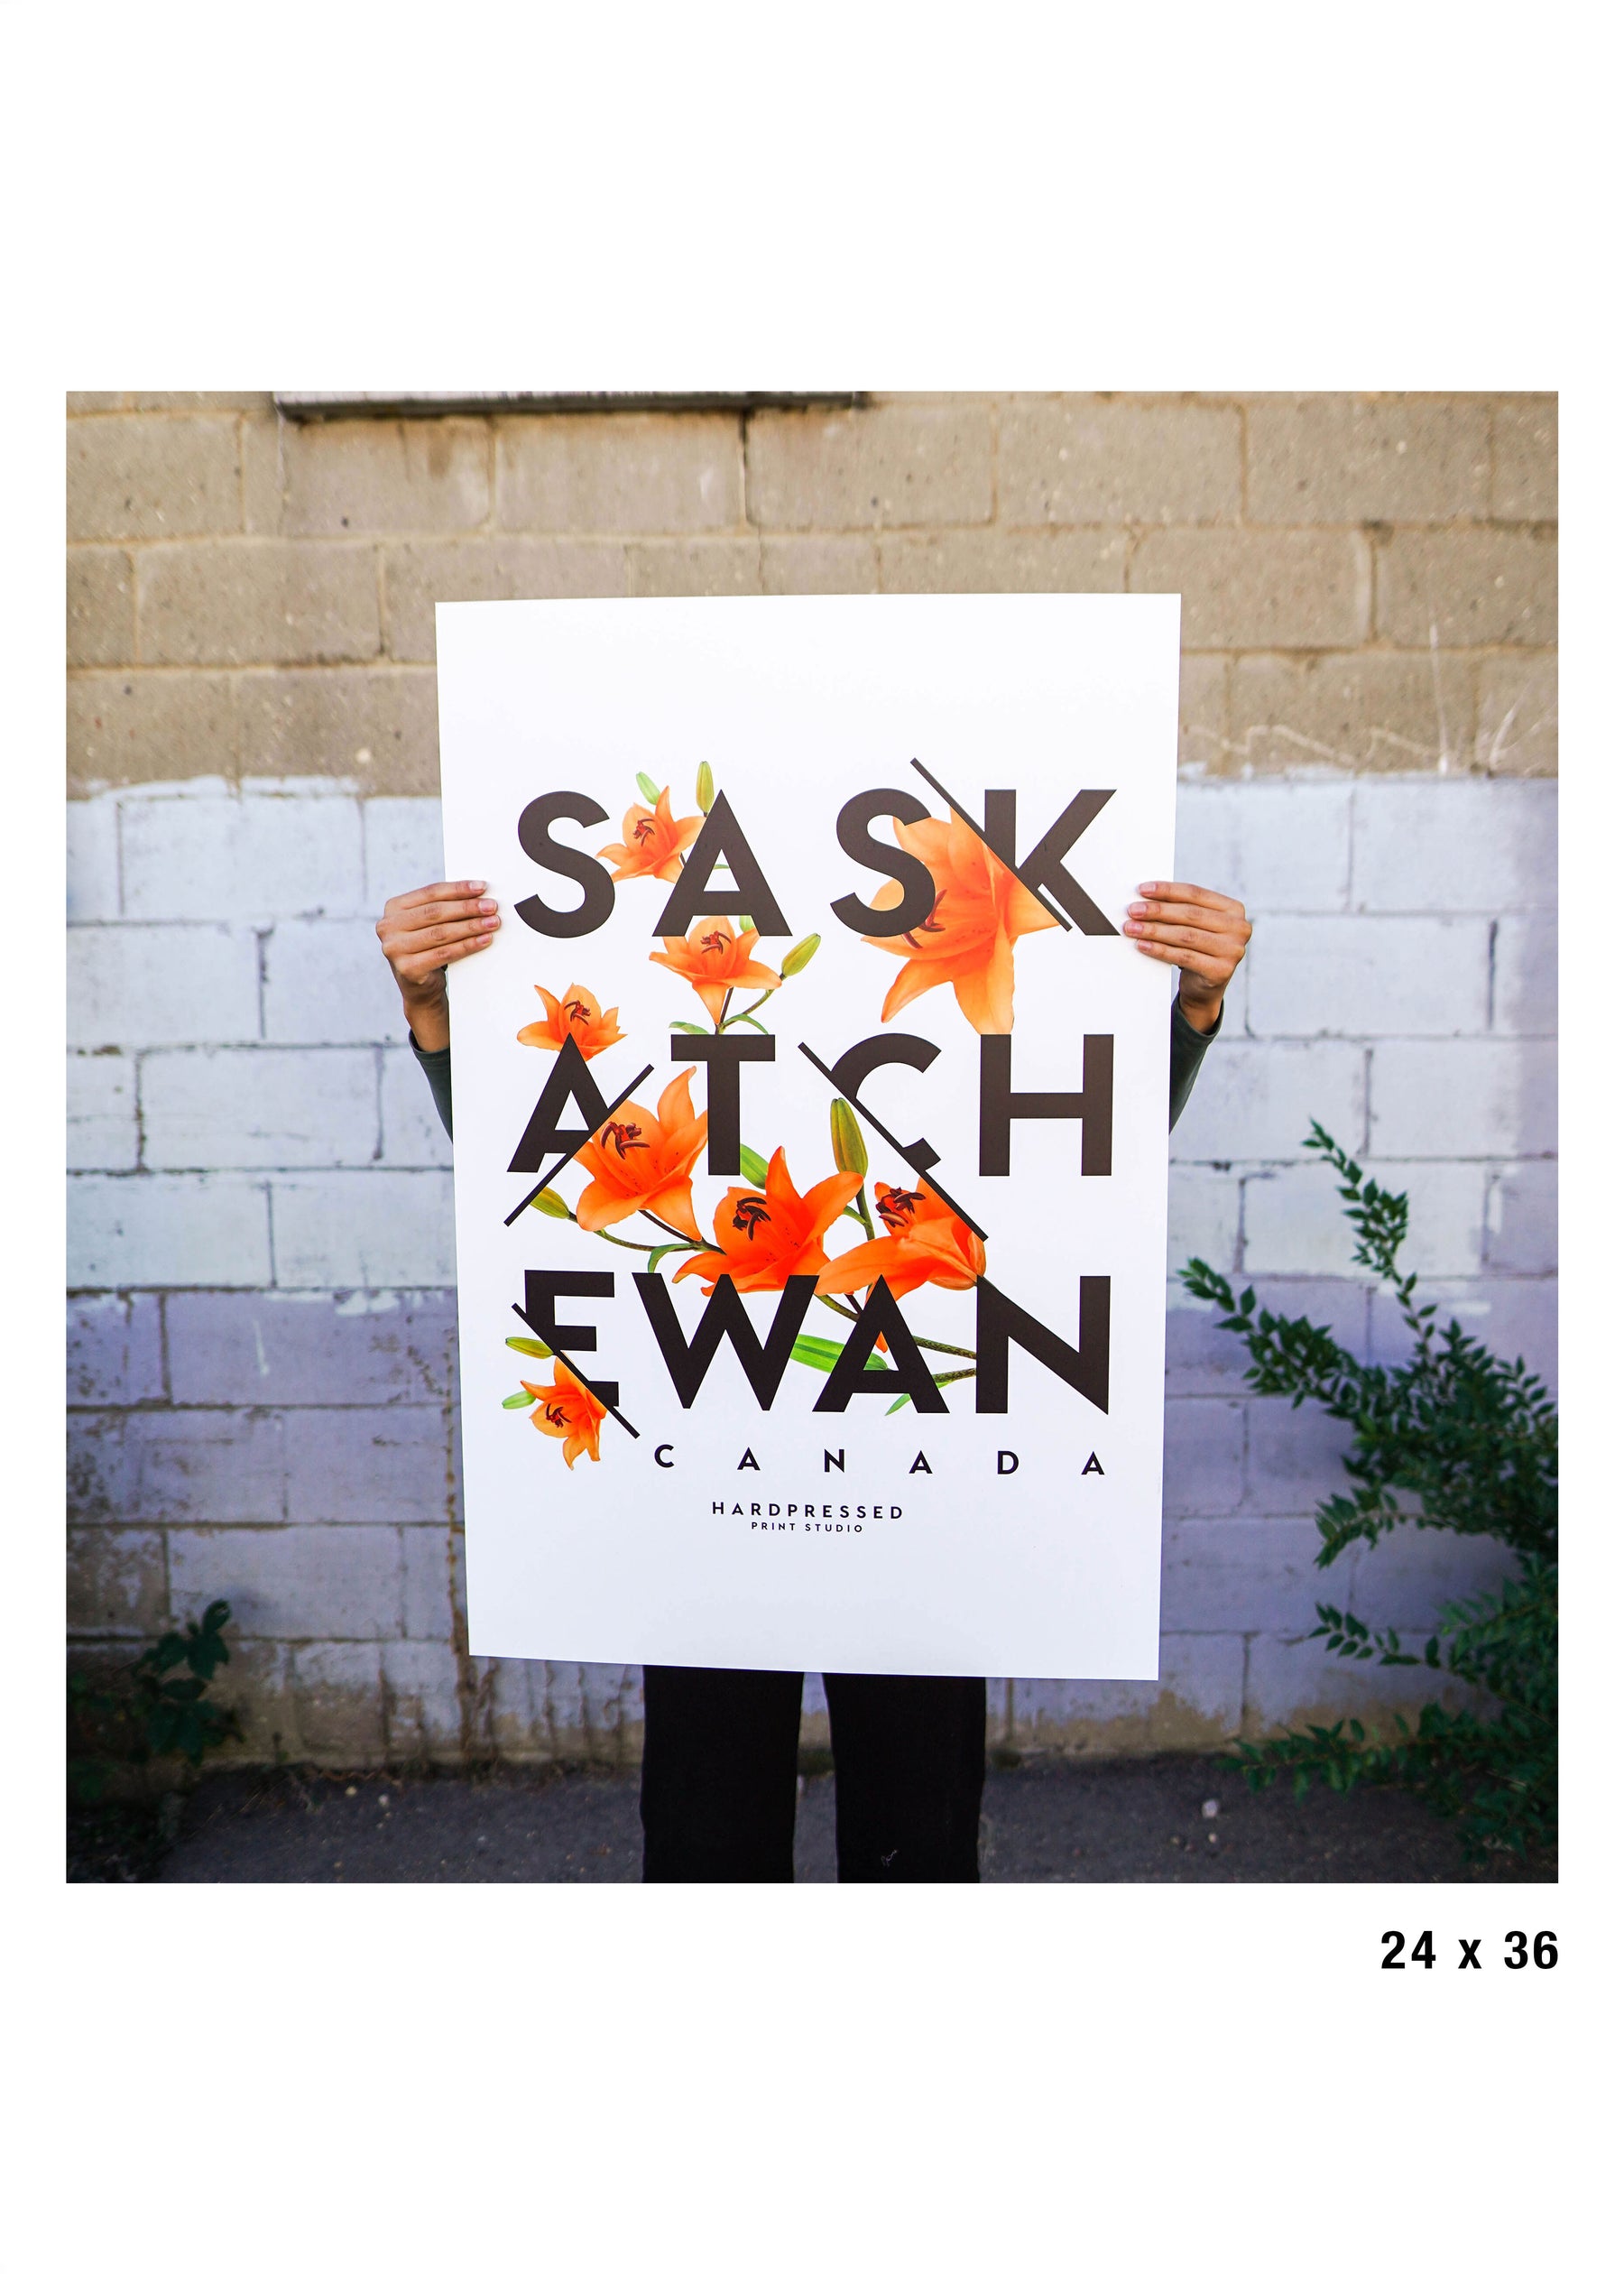 Slash Lily Poster - Hardpressed Print Studio